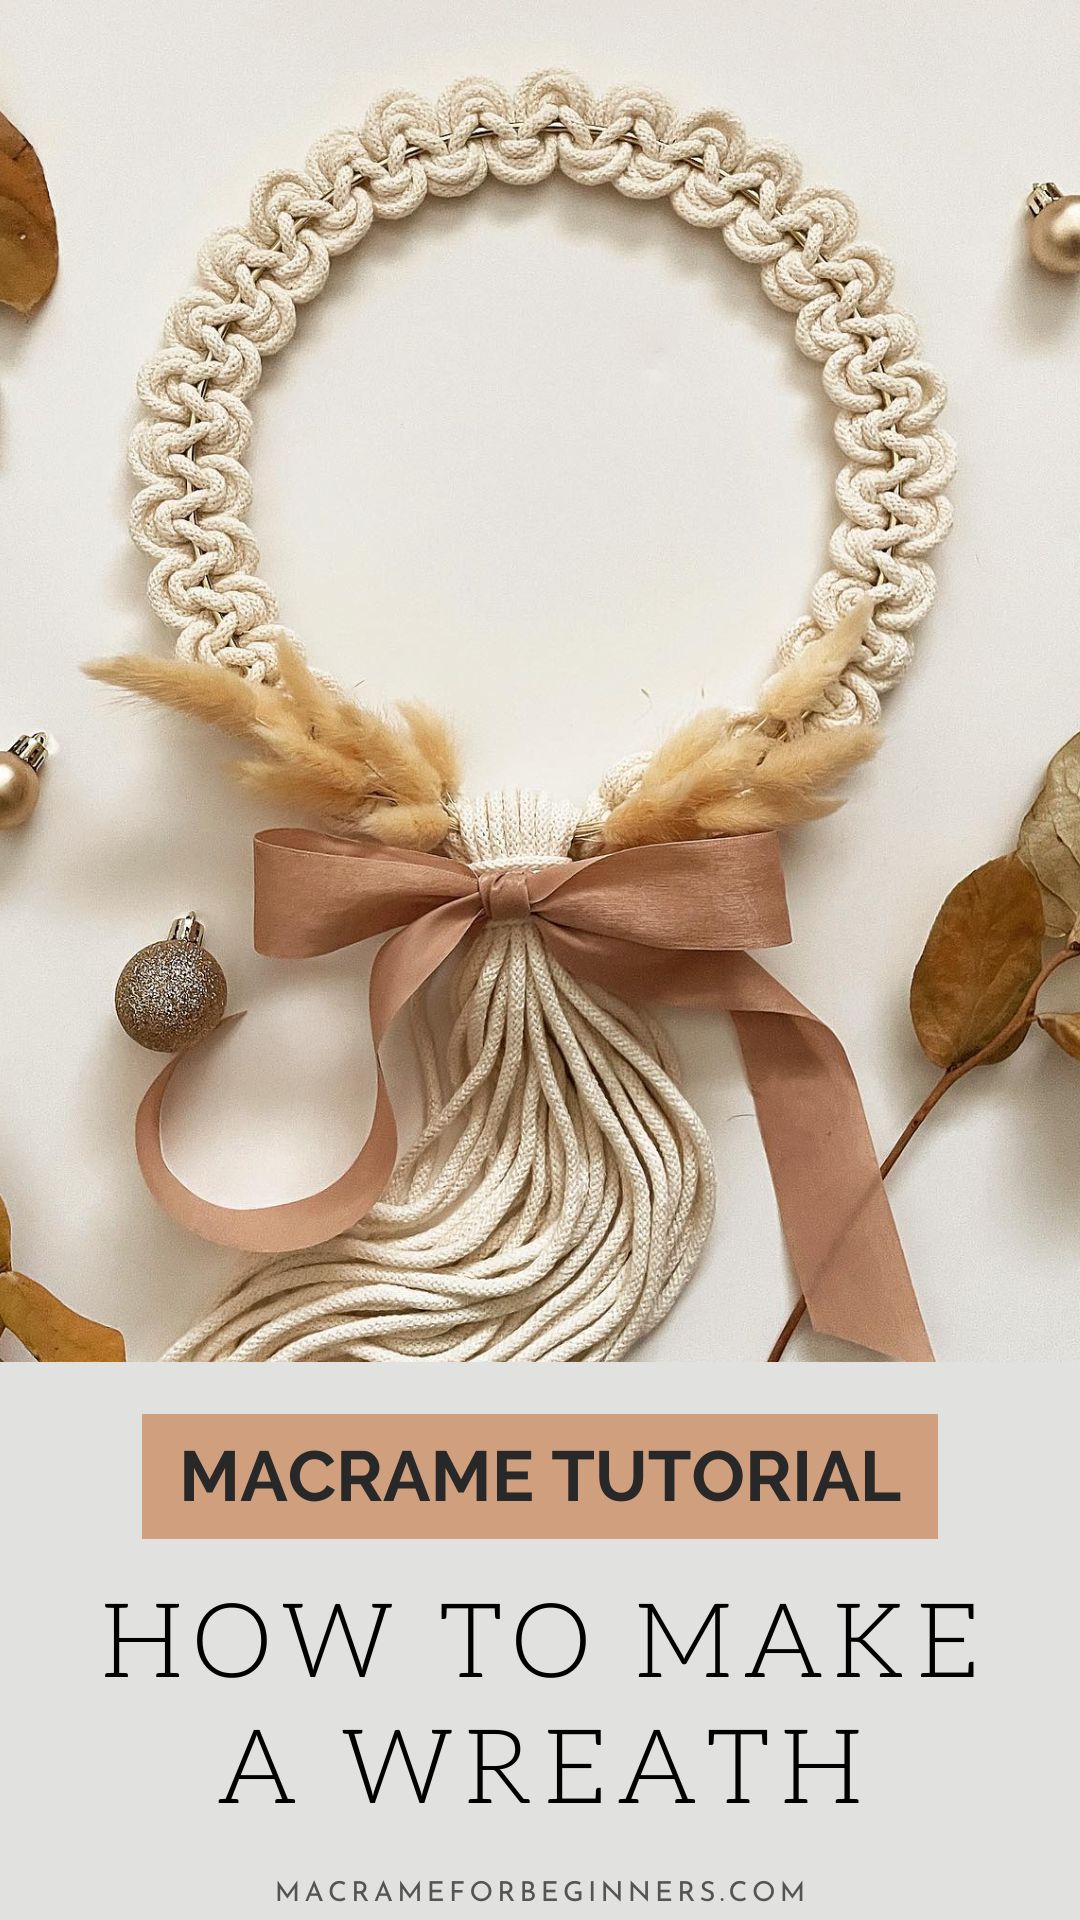 Easy DIY Macrame Christmas Wreath Tutorial by Soulful Notions - Macrame for Beginners